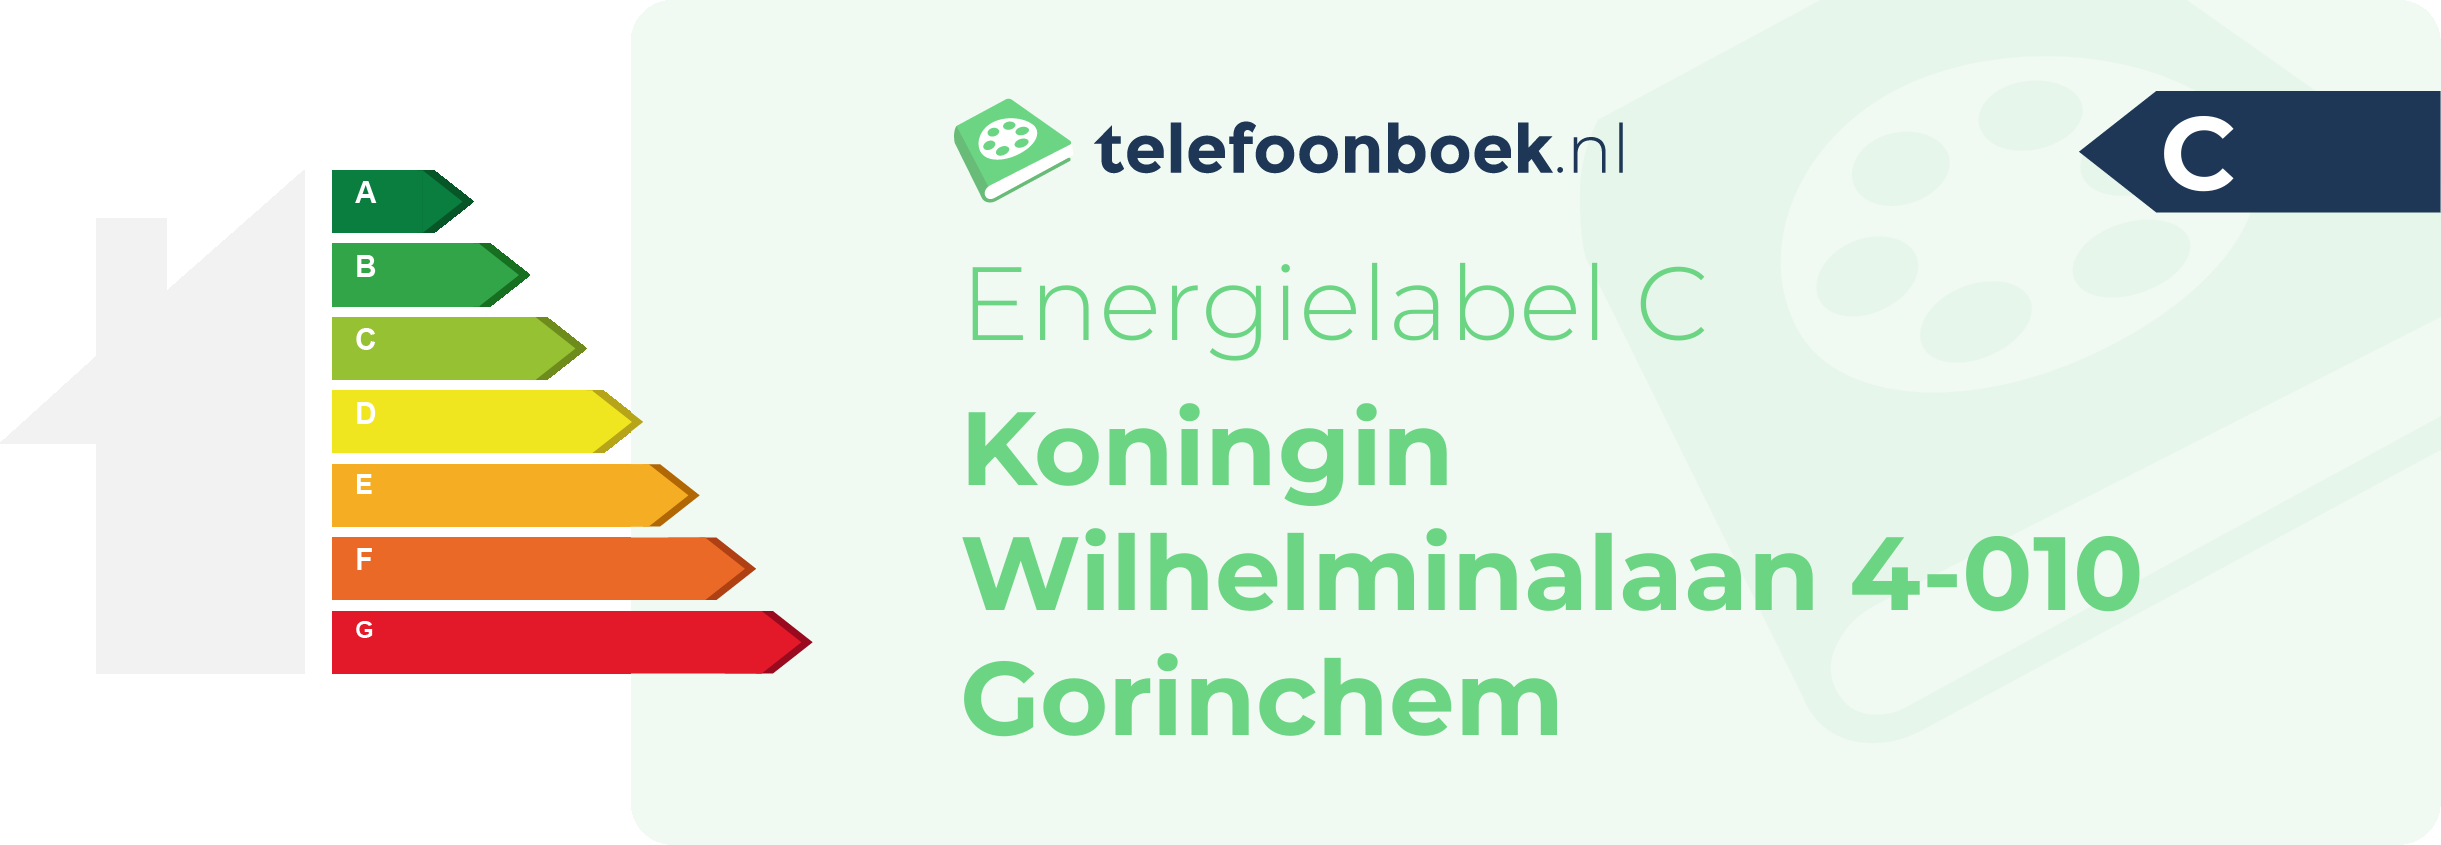 Energielabel Koningin Wilhelminalaan 4-010 Gorinchem